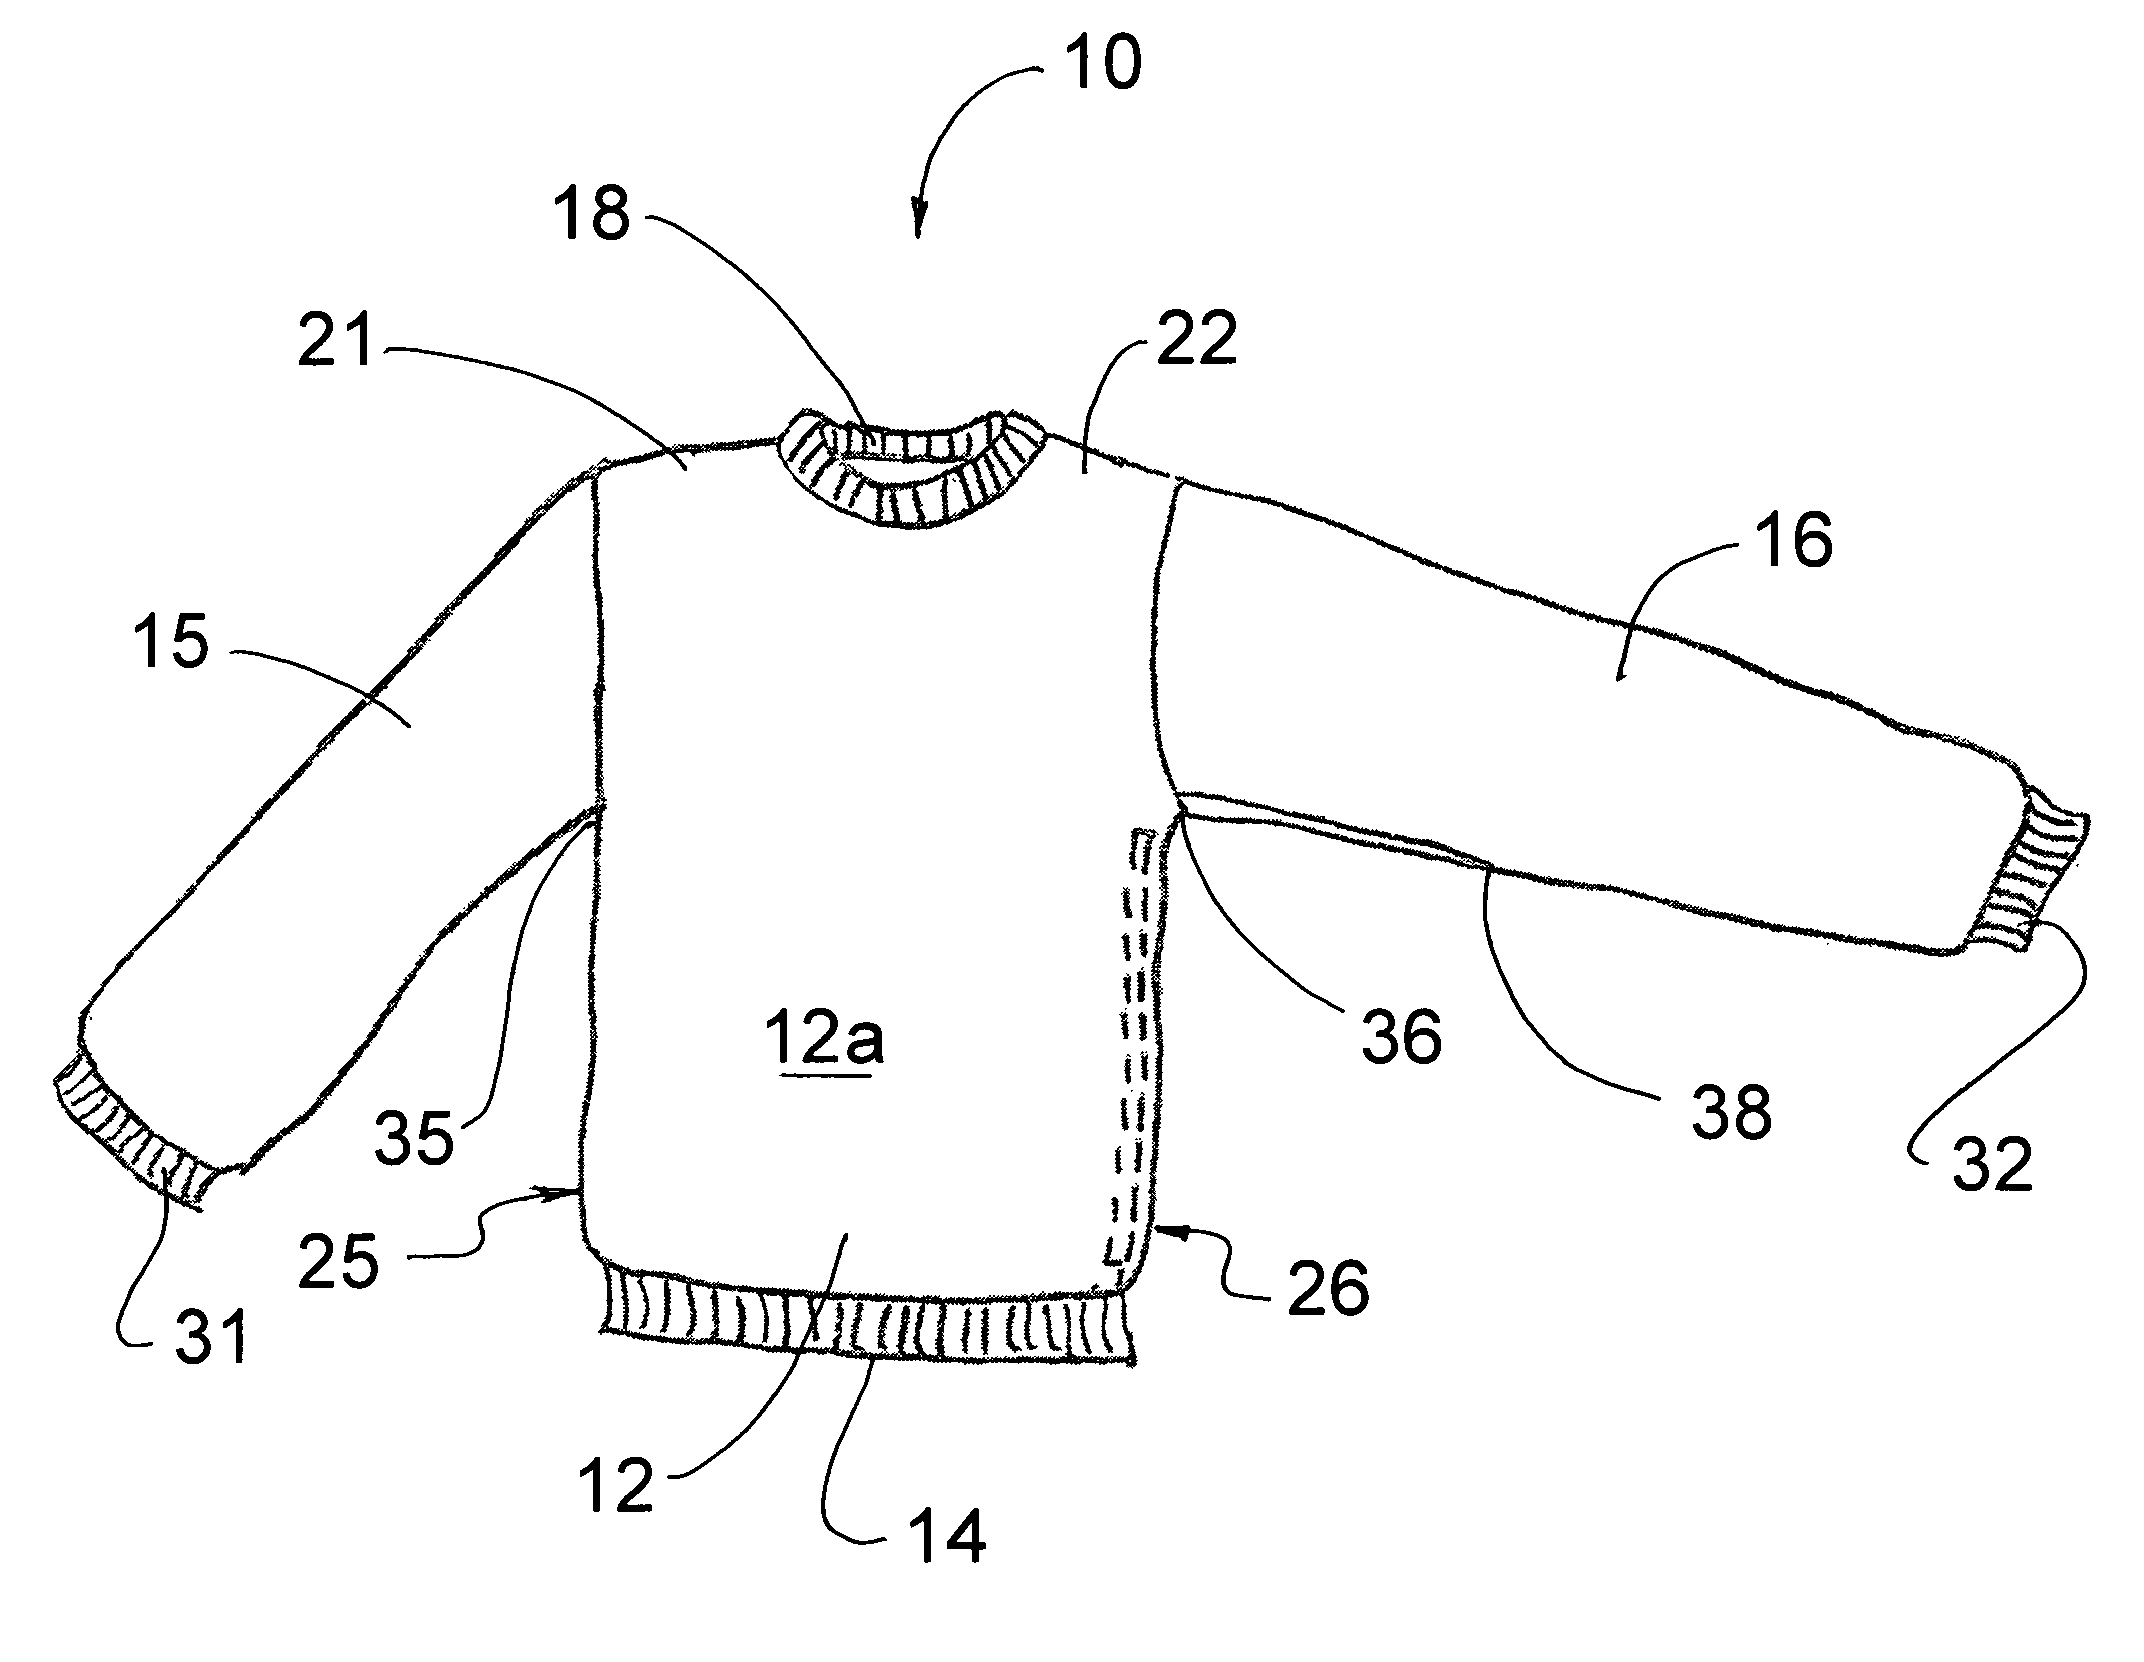 Upper garment for patient